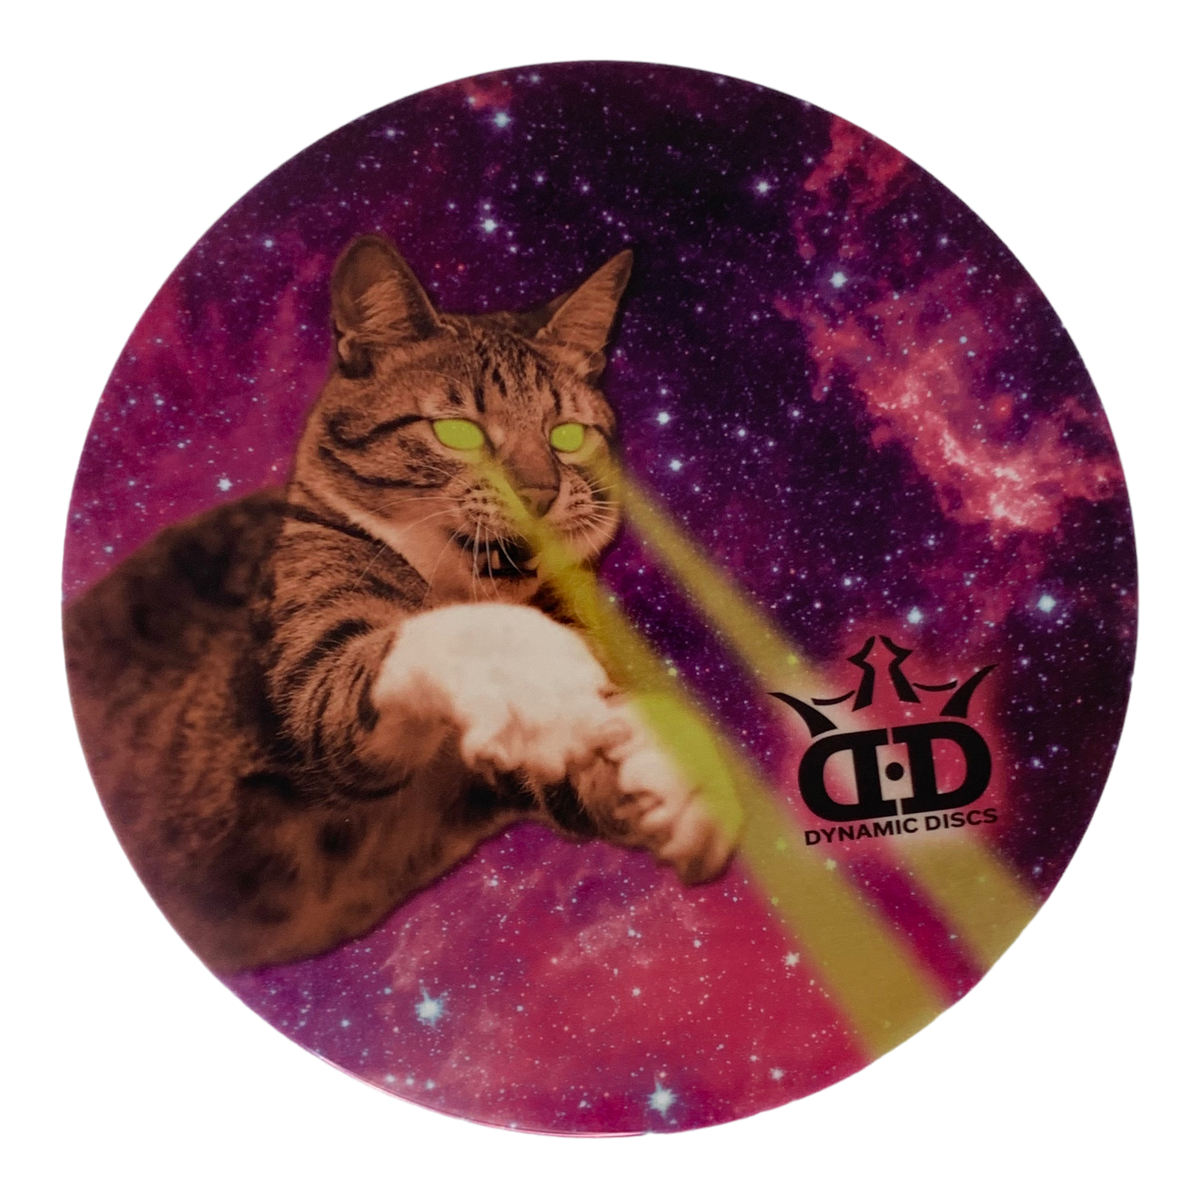 Dynamic Discs Fuzion DyeMax Felon - Laser Kitty